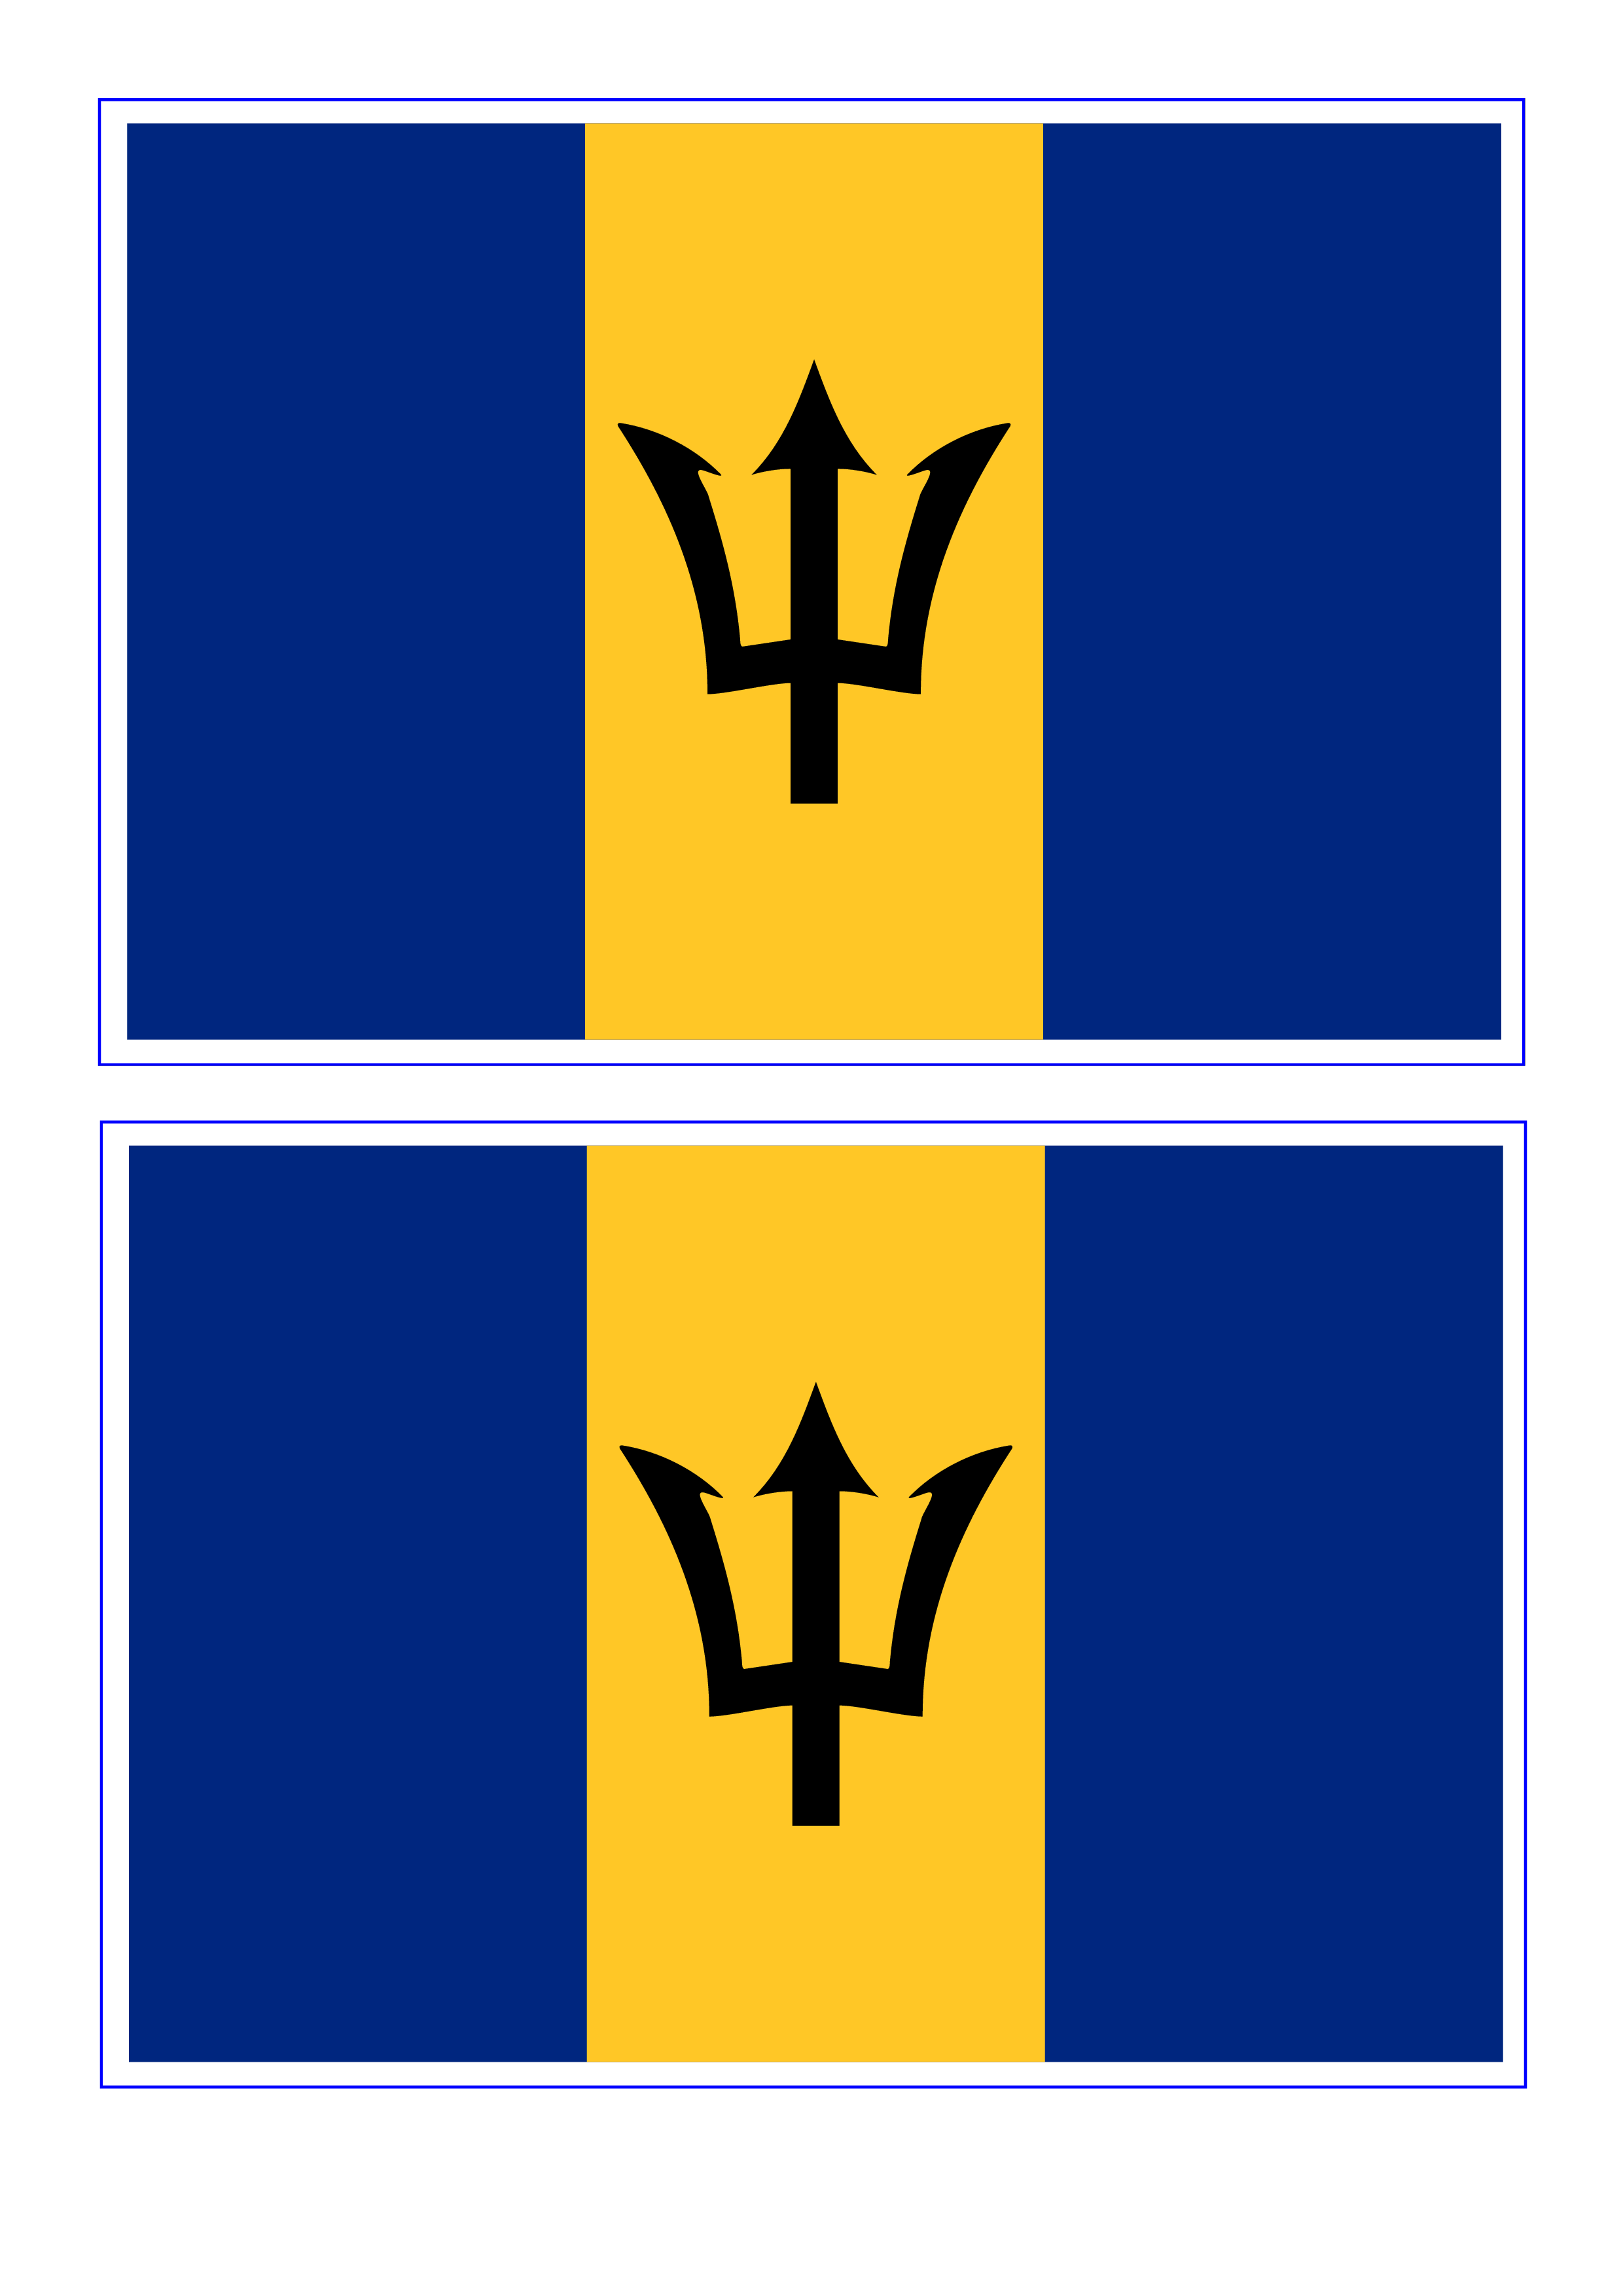 Барбадос флаг. Барбадос флаг герб. Флаг Барбадоса. Герб Барбадоса. Флаг страны Барбадос.